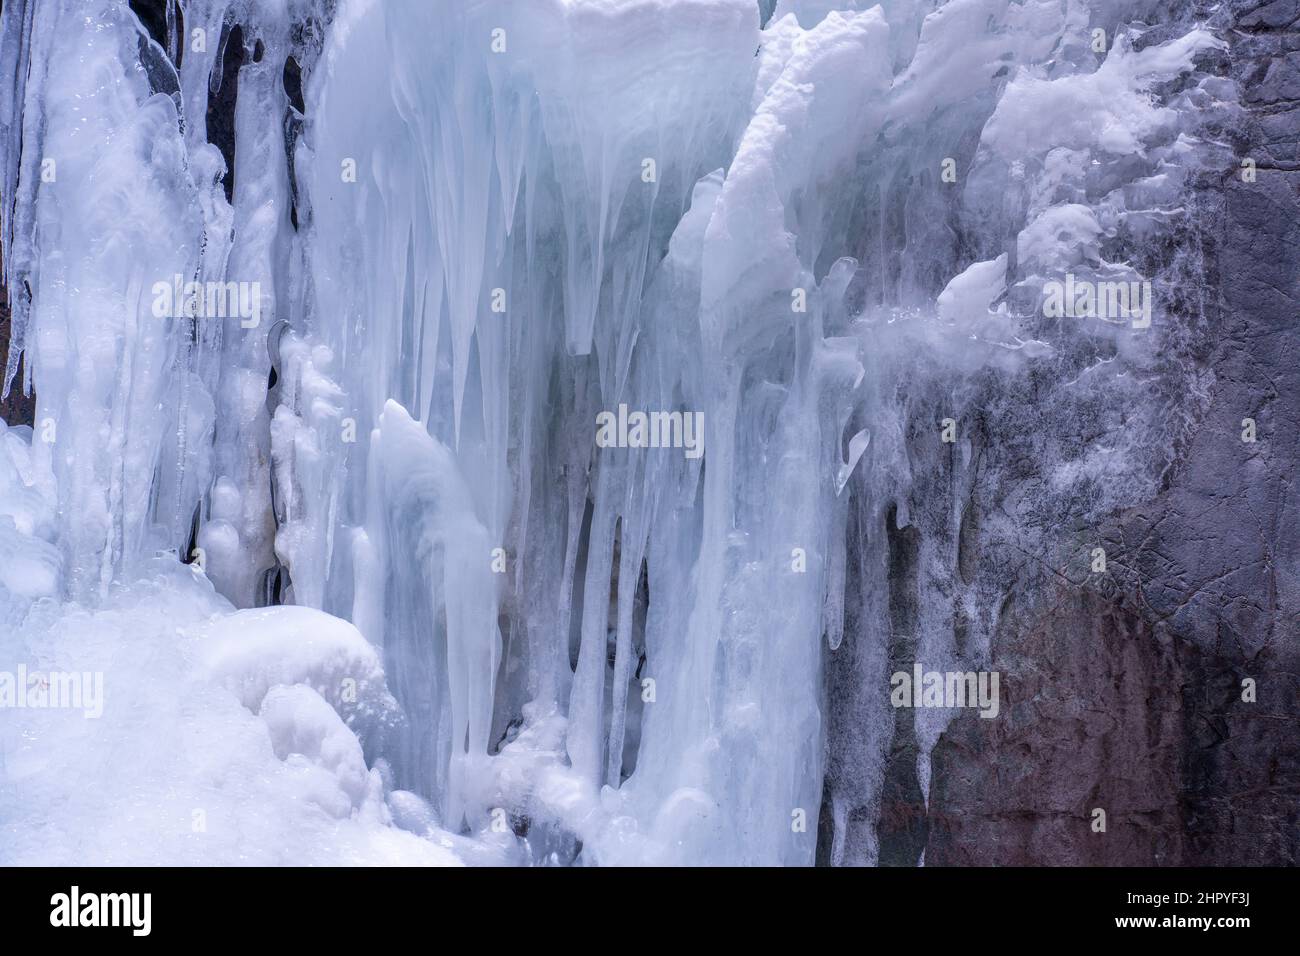 Eisformationen am gefrorenen Wasserfall des Box Canyon im Box Canyon Falls Park in Ouray, Colorado. Stockfoto